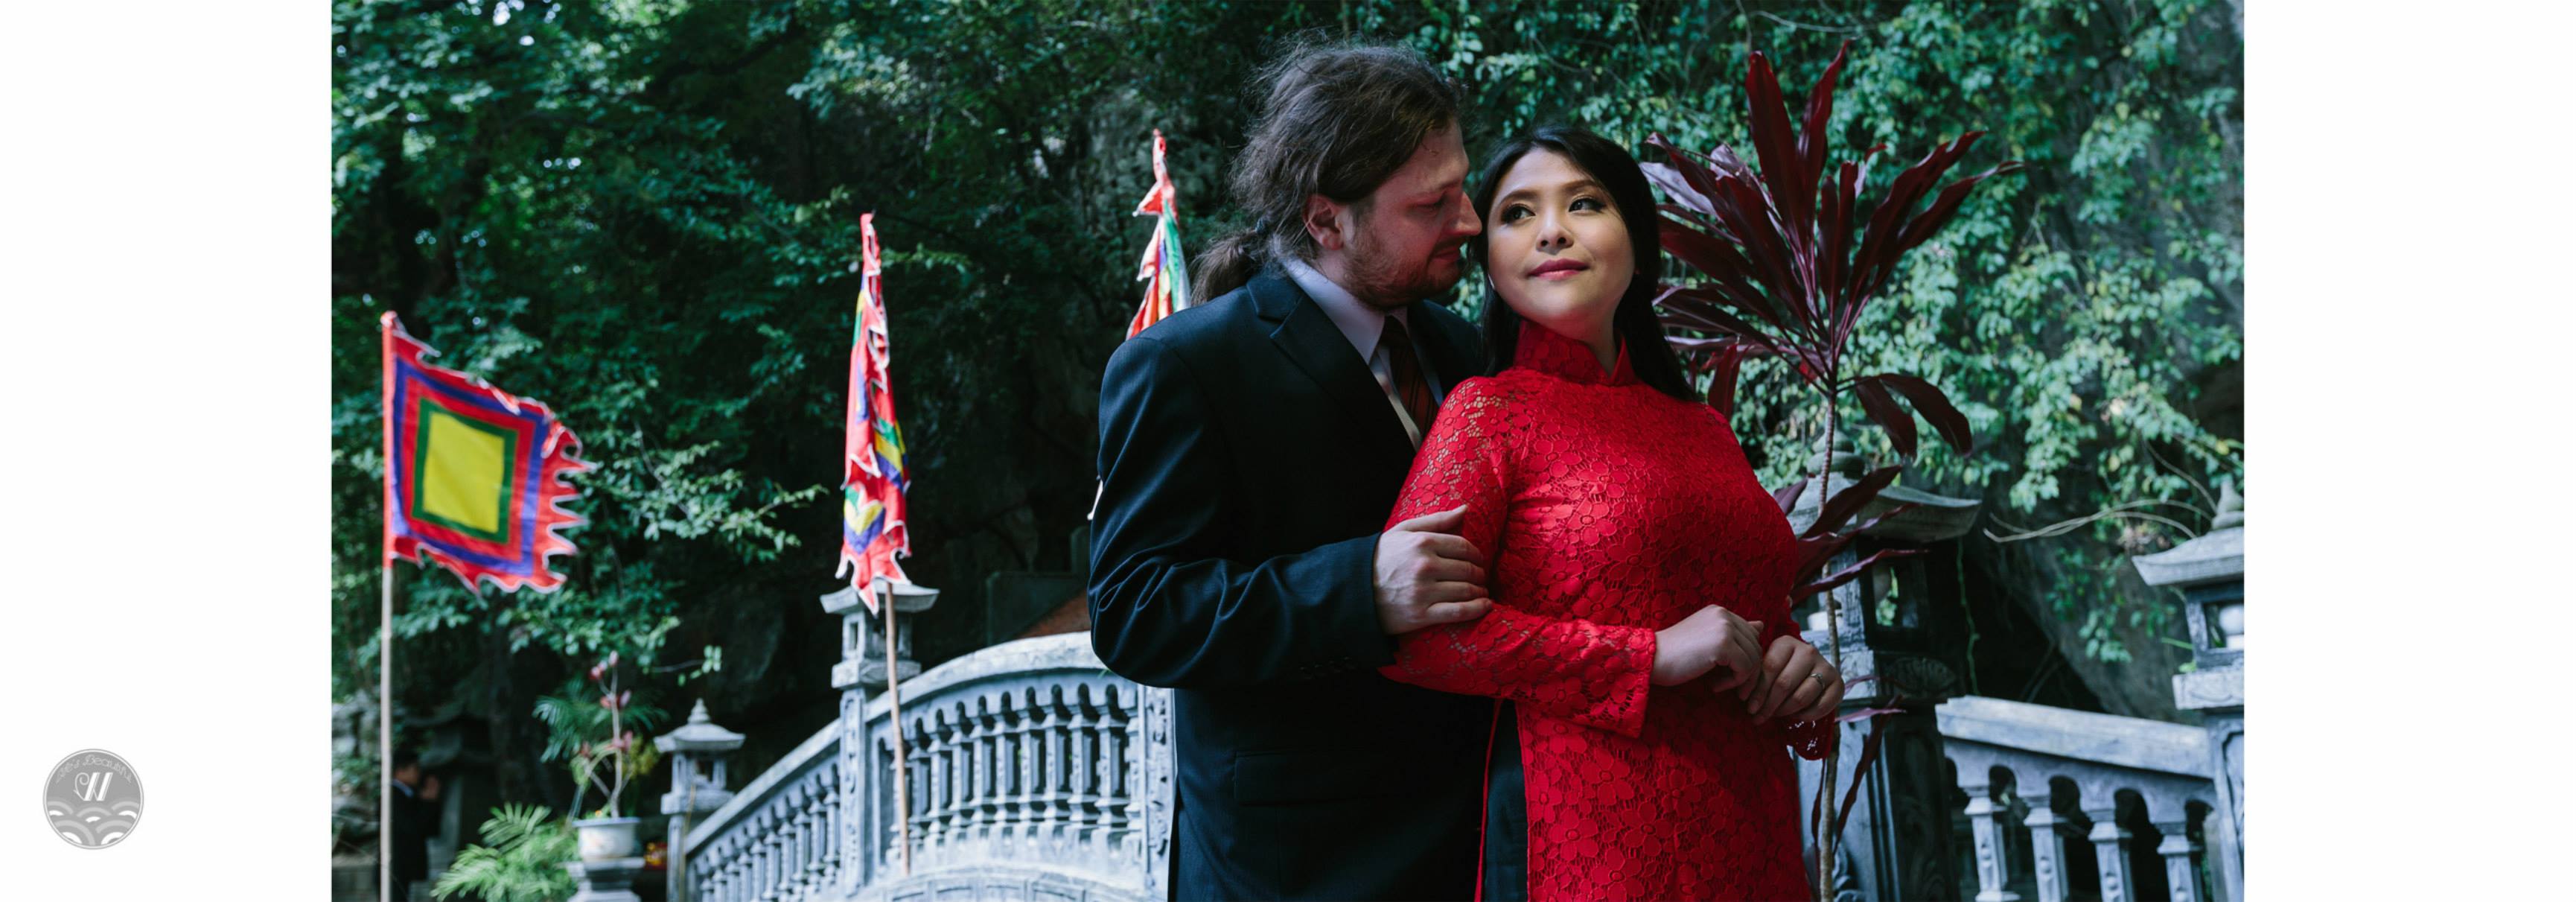 Tomas and Trang Pre-wedding in Ninh Bình